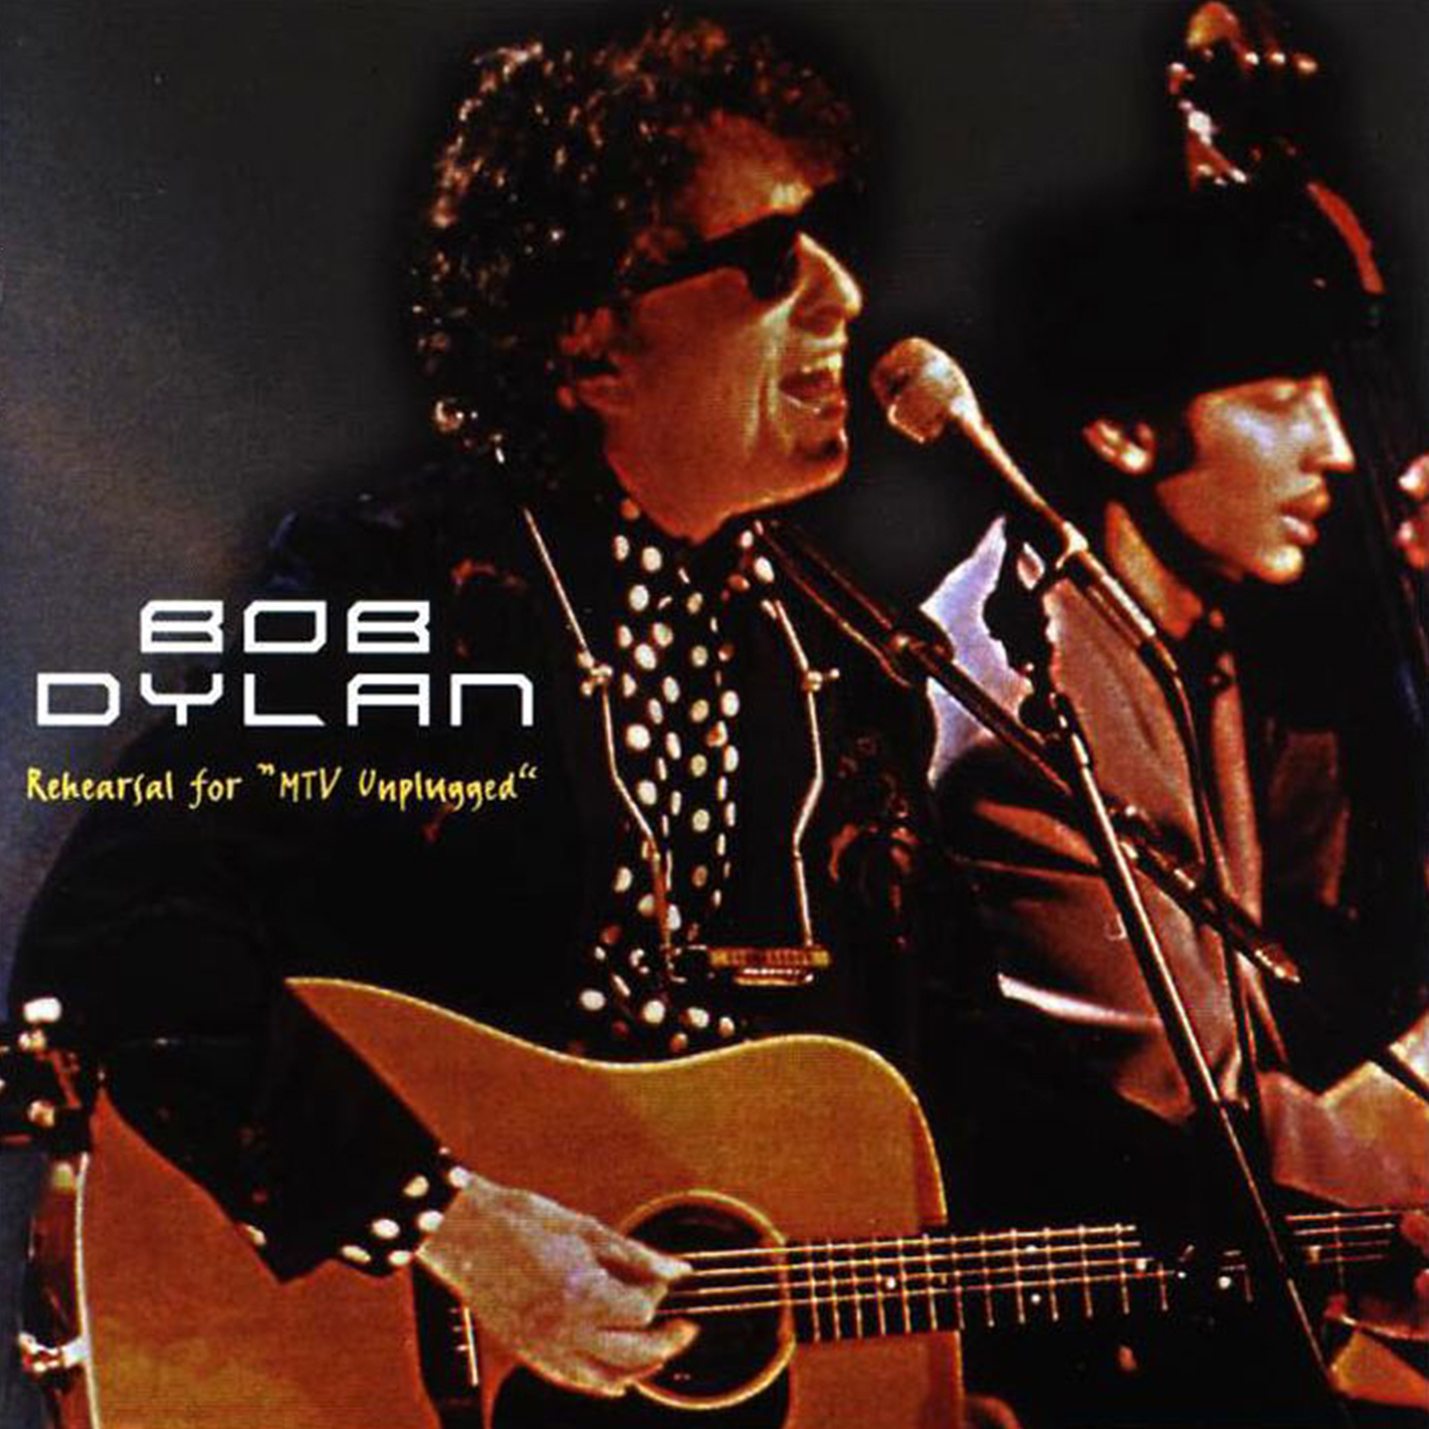 BobDylan1994-11-15RehearsalForMTVUnpluggedSonyMusicStudiosNYC (2).jpg